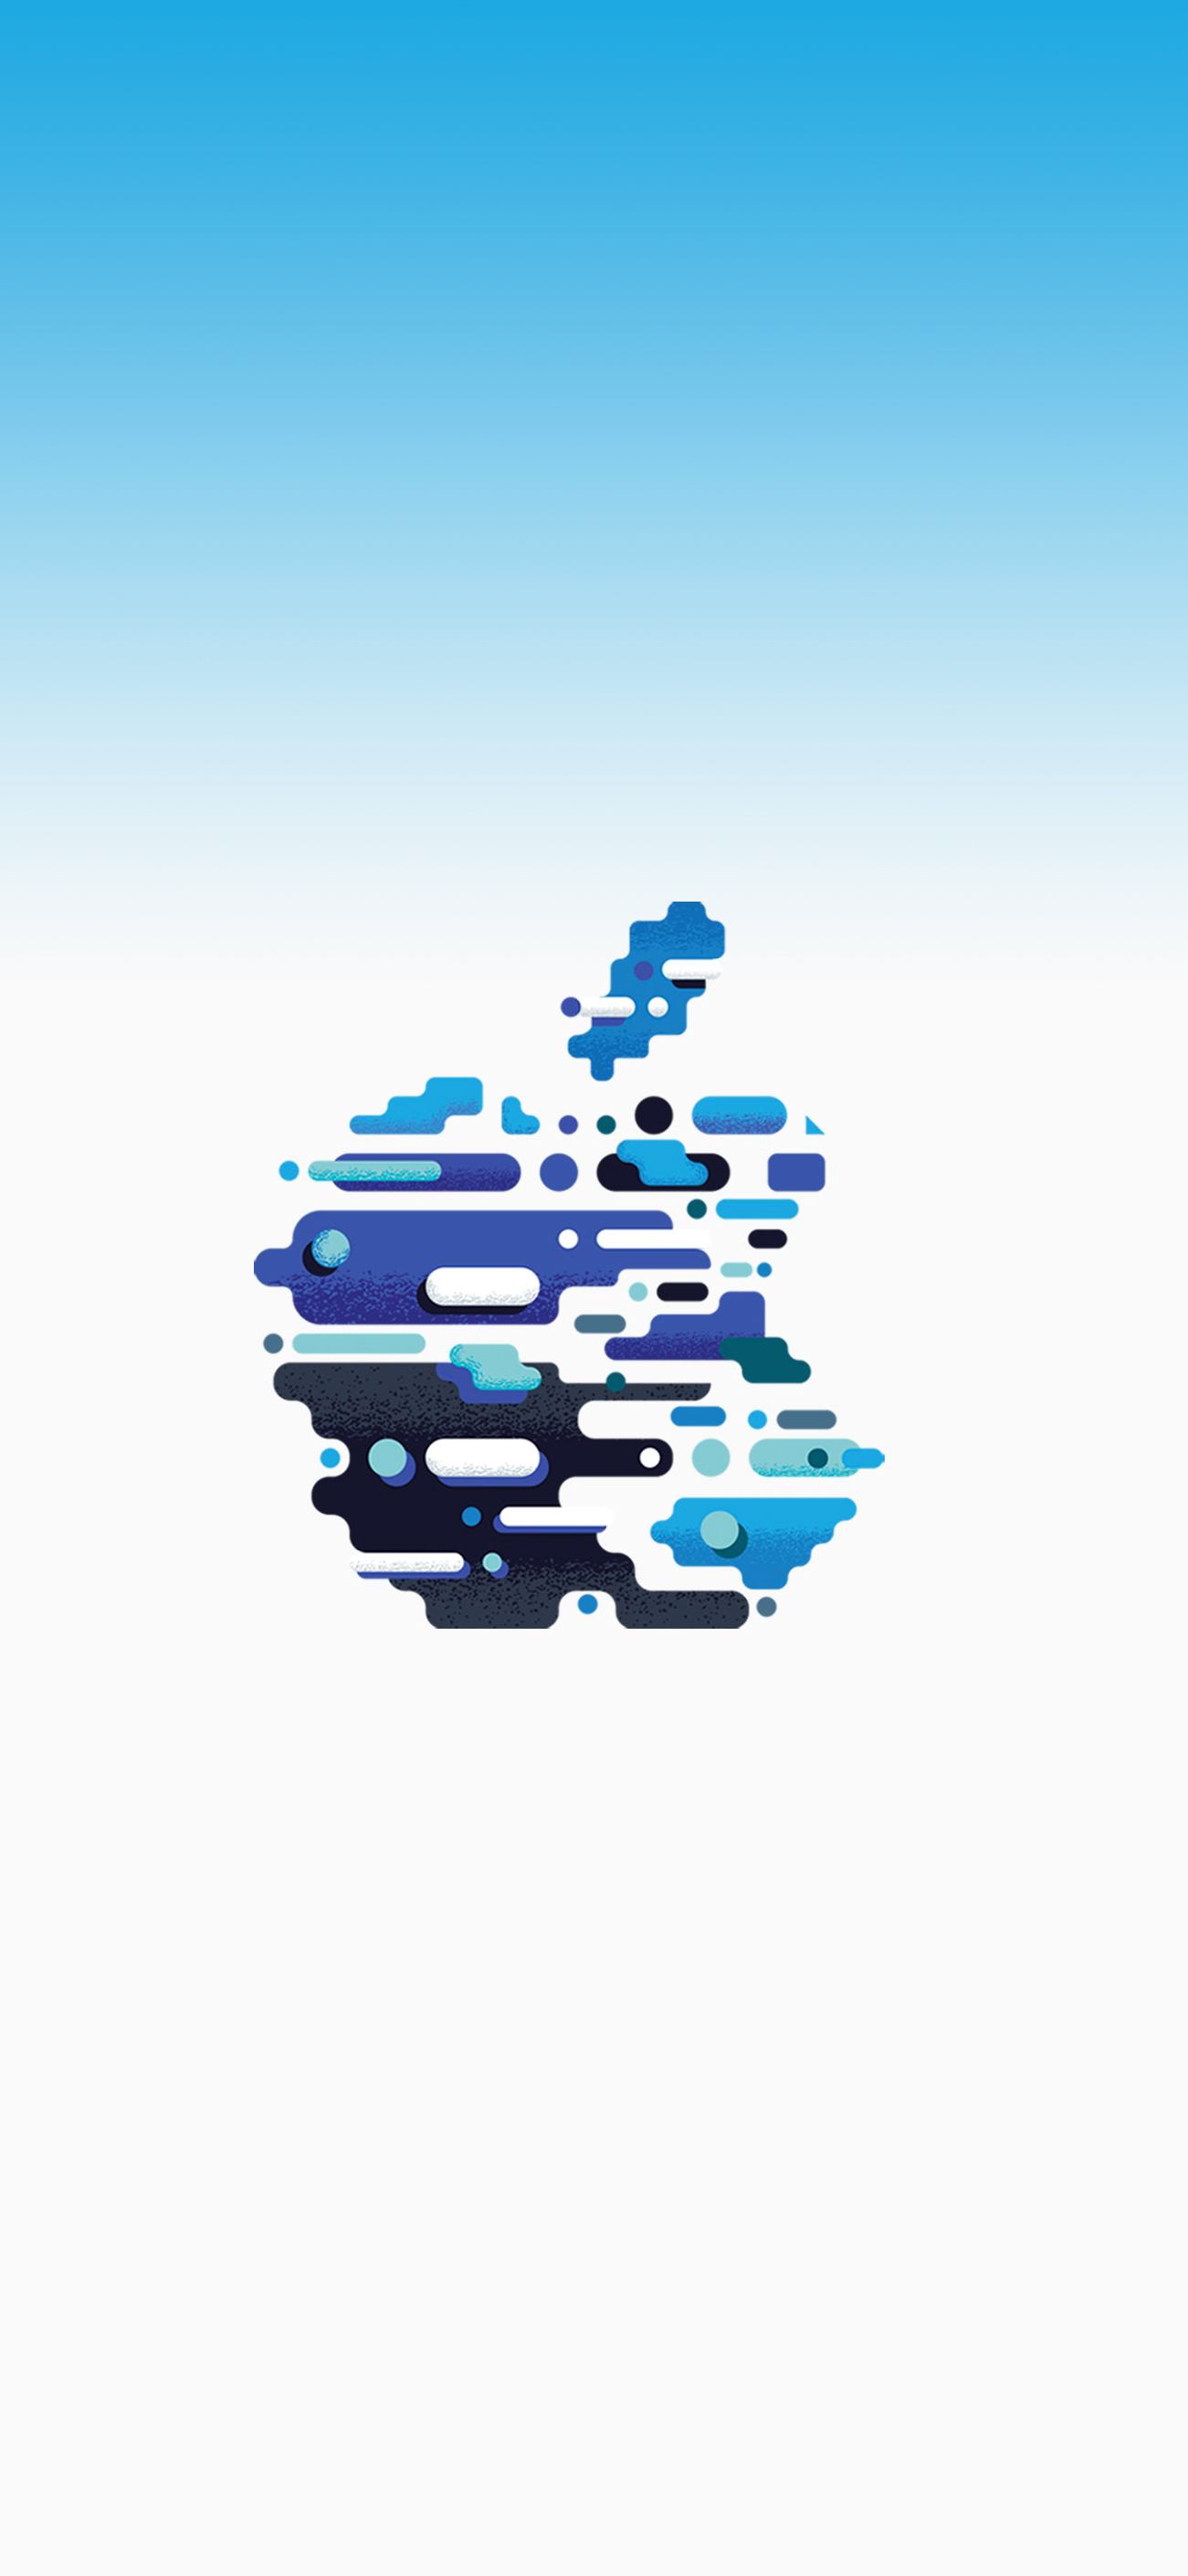 BLUE GAMEBOY WALLPAPER IPHONE in 2023  Gameboy, Apple logo wallpaper,  Apple logo wallpaper iphone